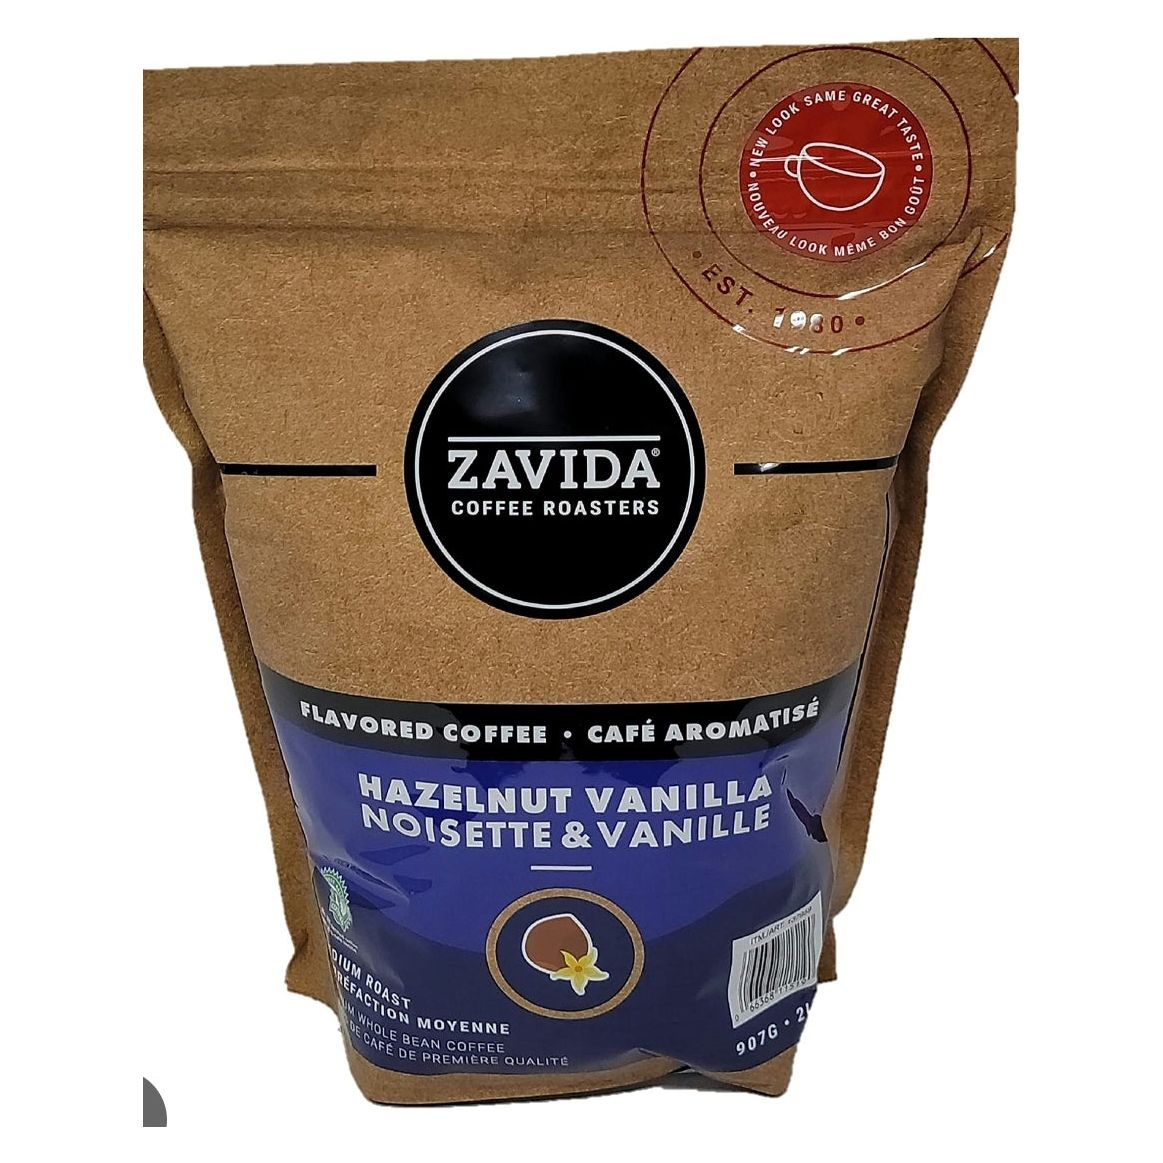 CASE LOT Zavida Hazelnut Vanilla Flavored Coffee, 907g